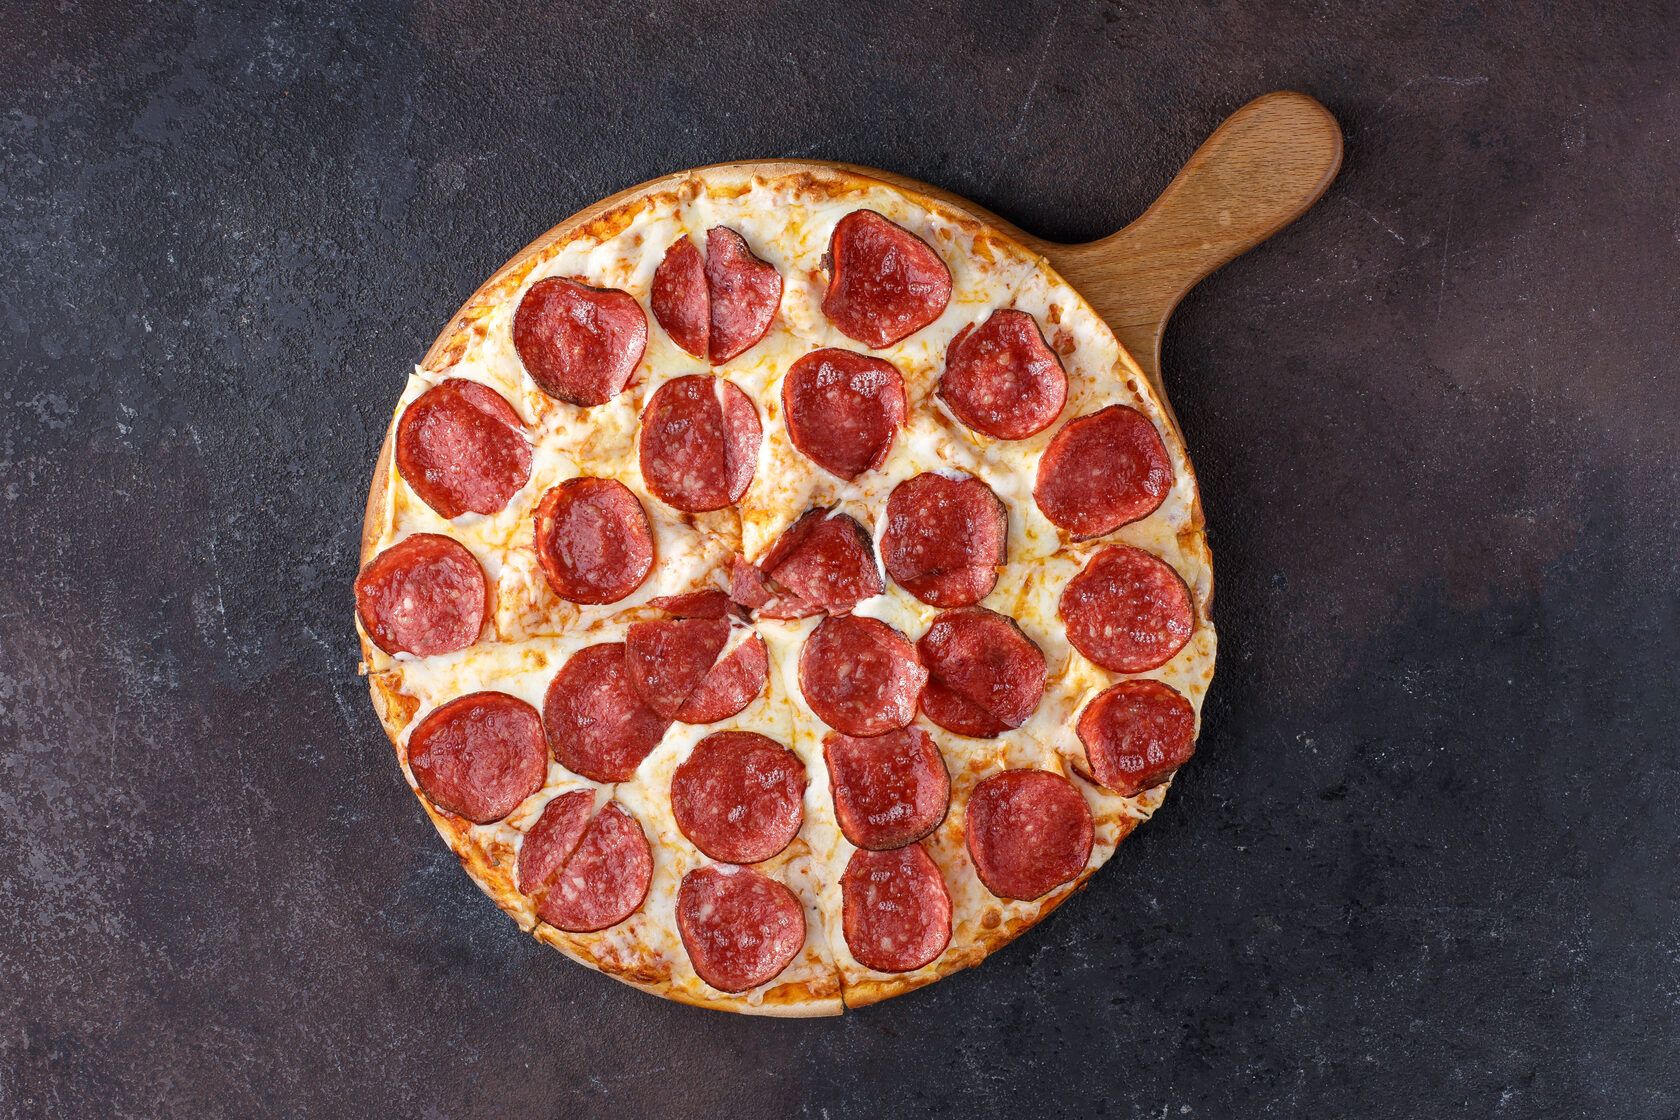 технологическая карта пицца пепперони 30 см фото 87